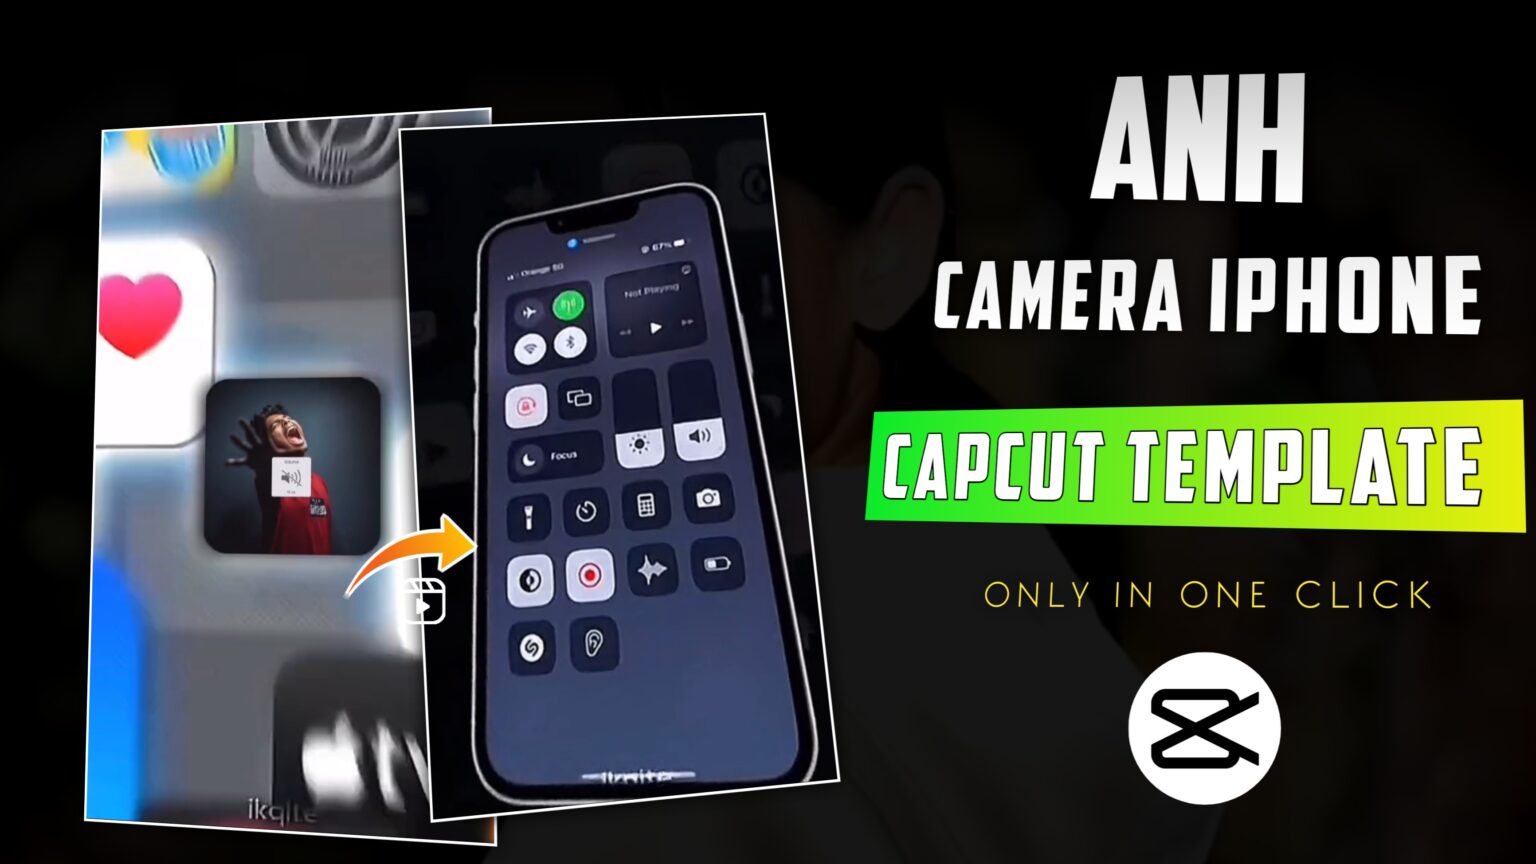 Template Capcut Iphone